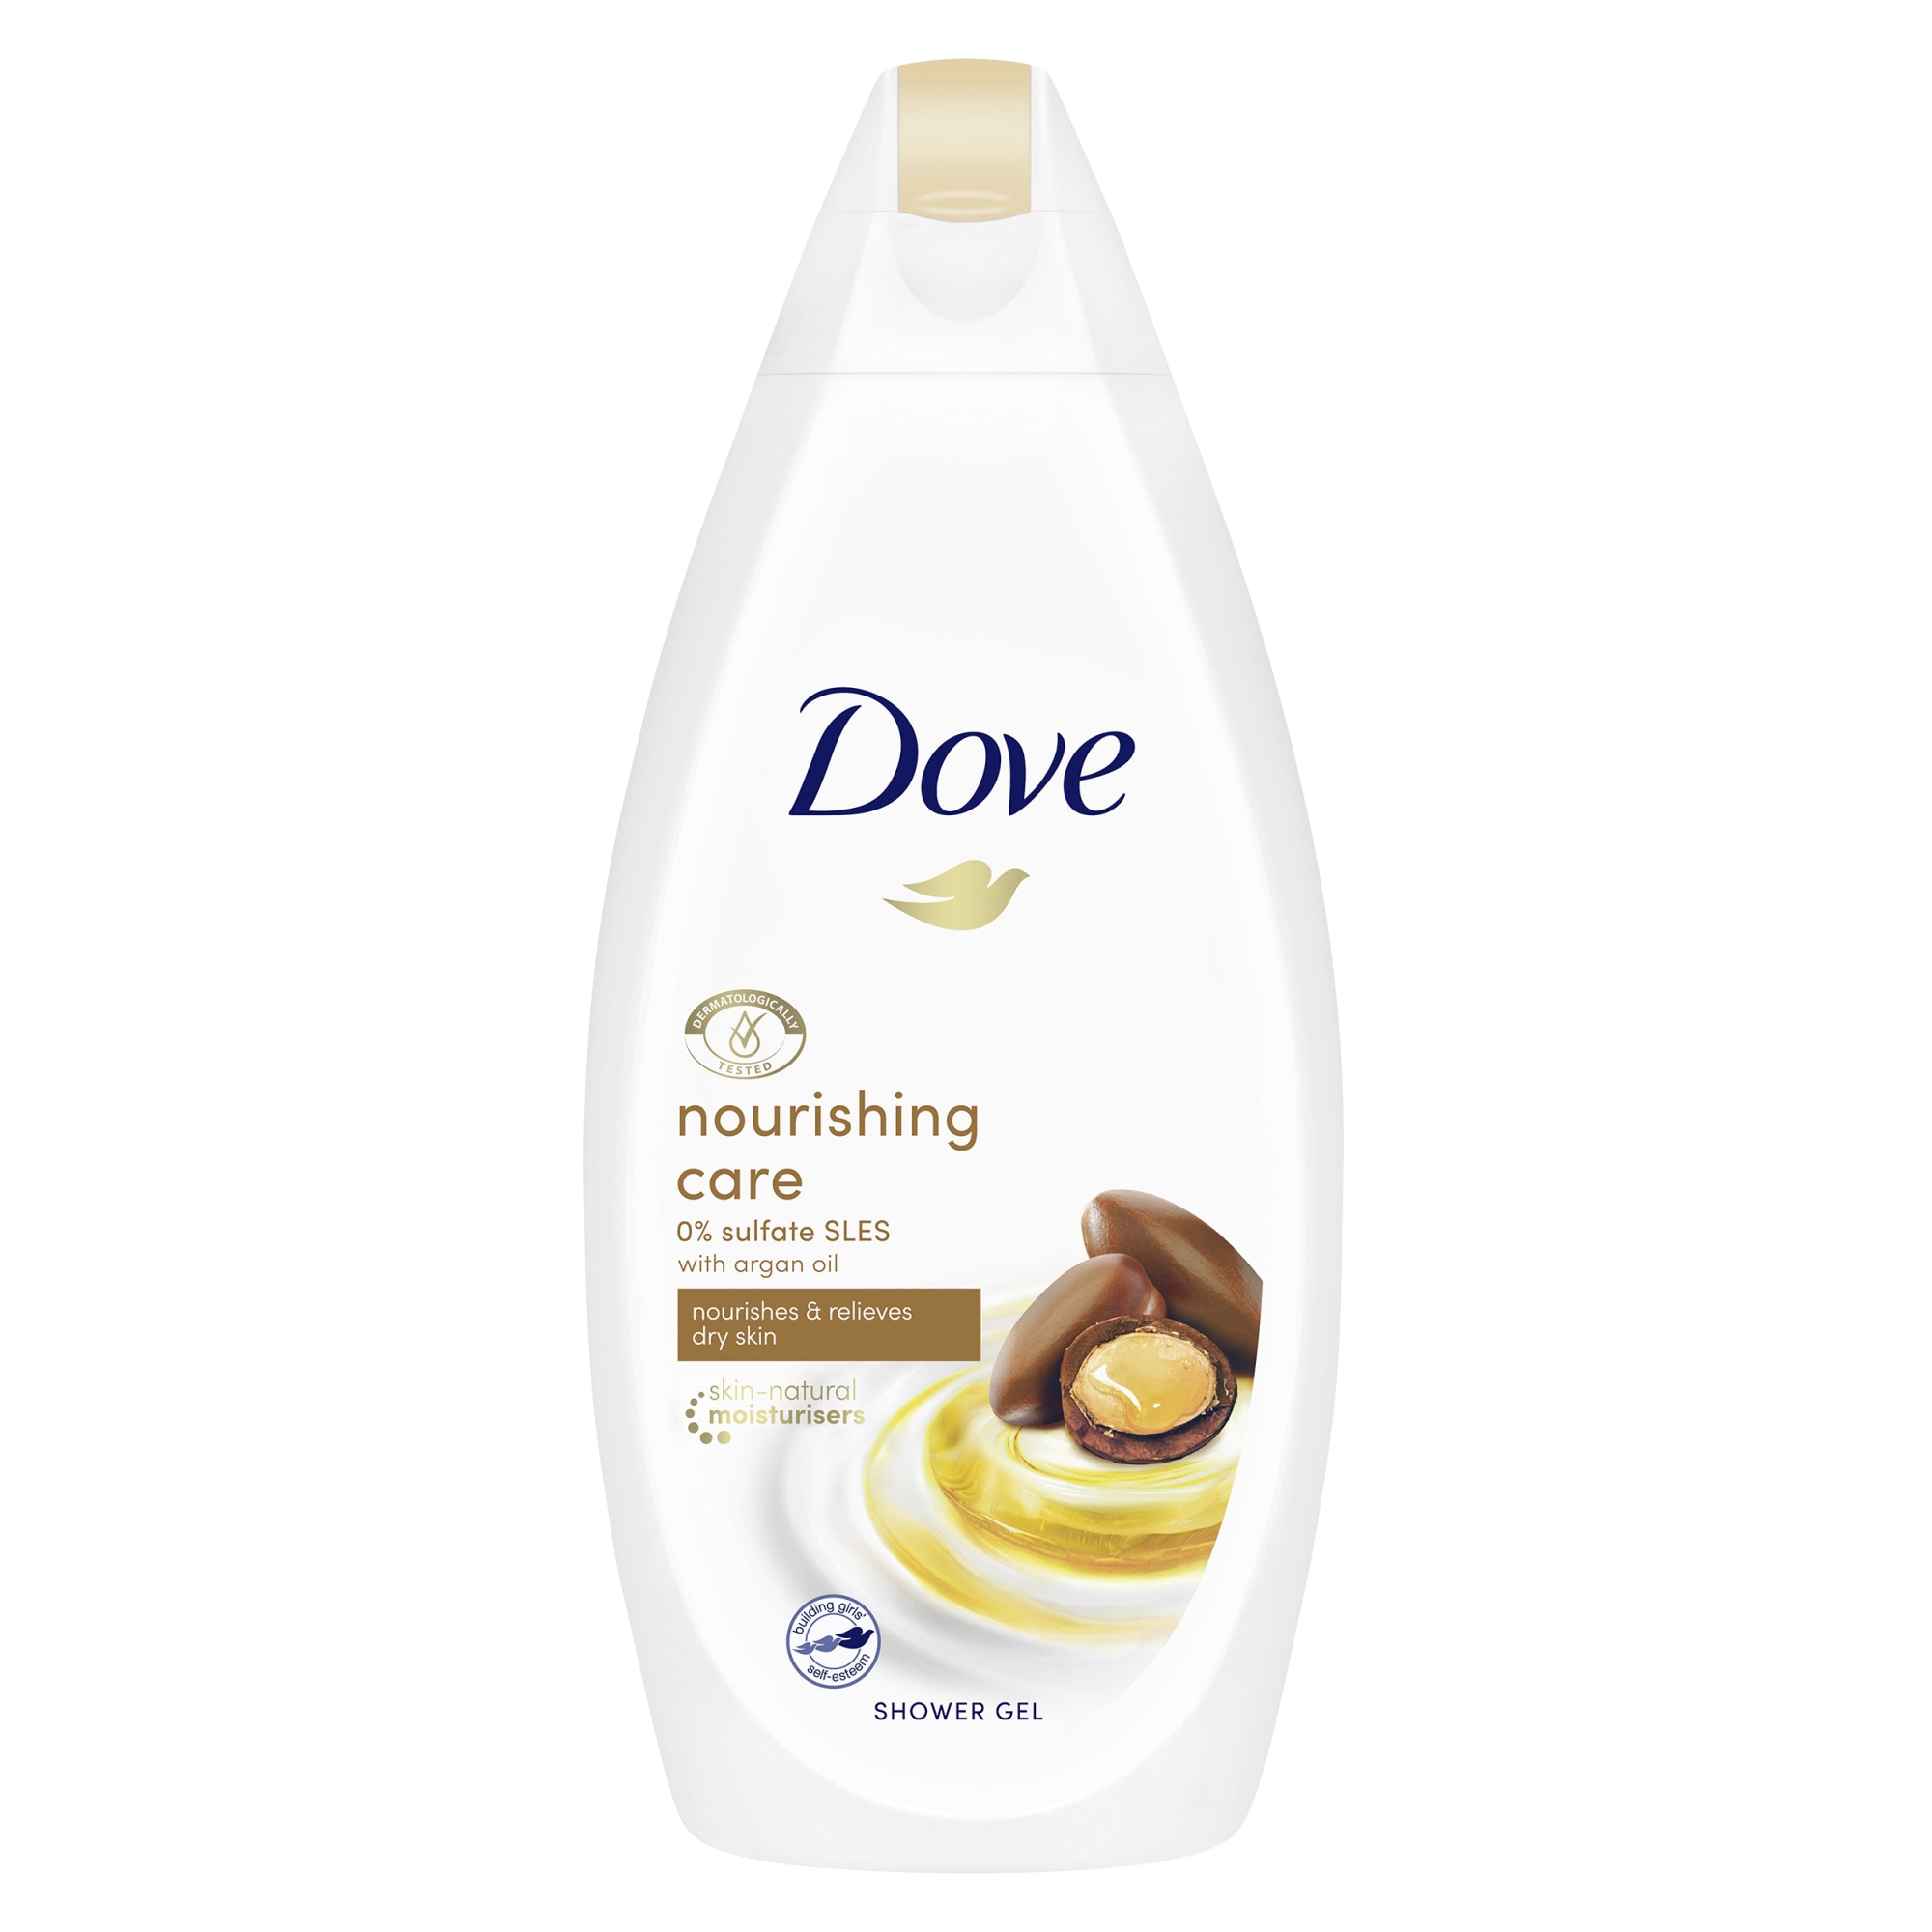 Gel de dus Dove Nourishing Oil Care, 500 ml 